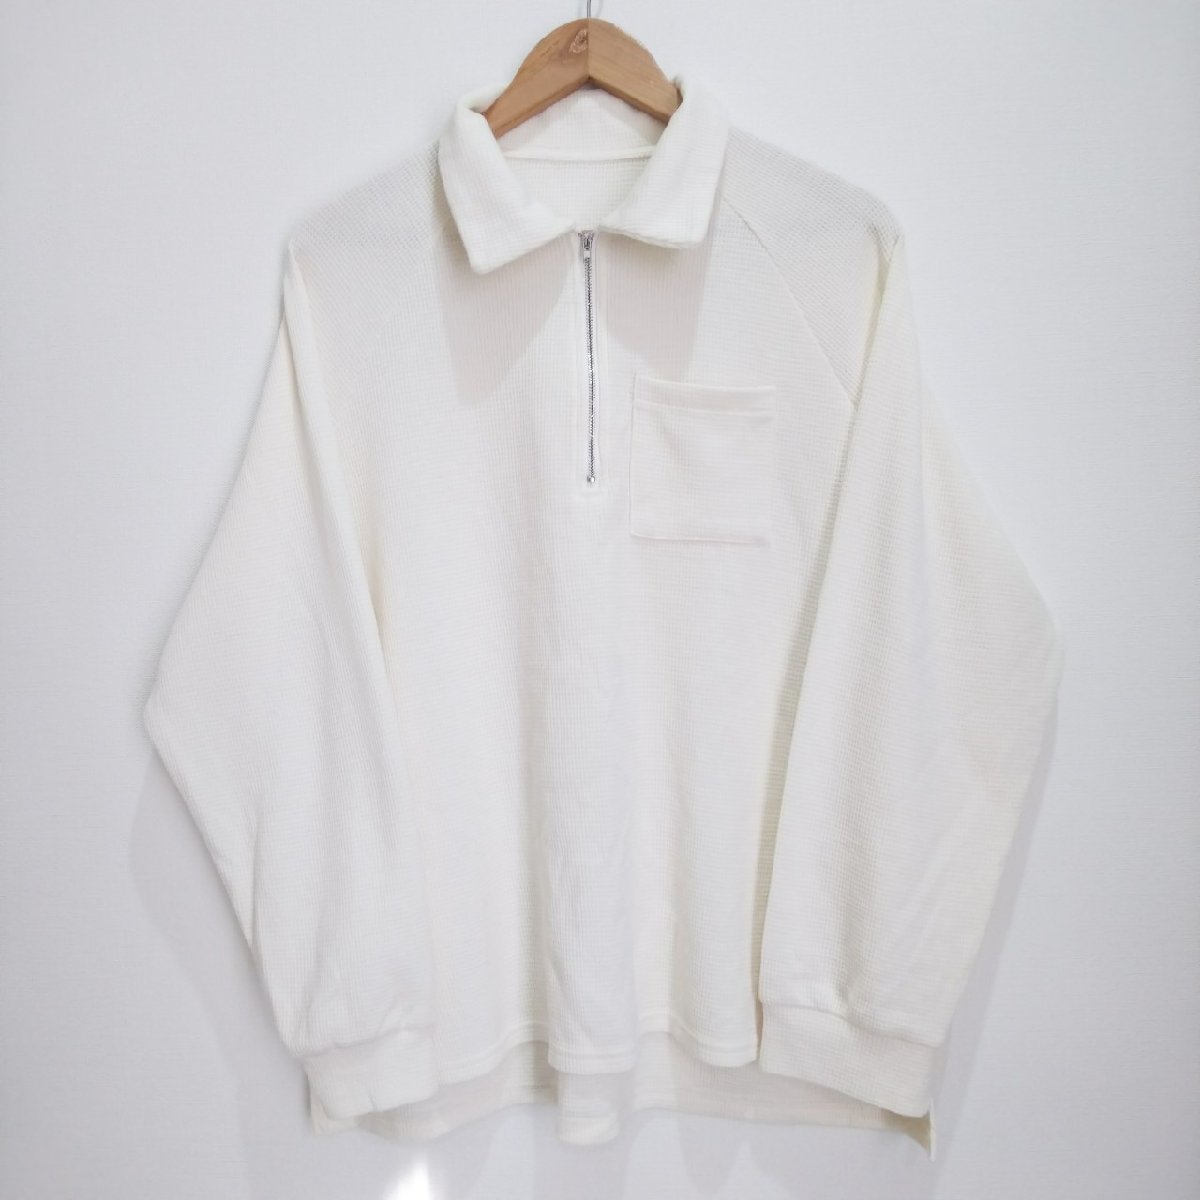 (^w^)b デイジー ハーフジップ スウェット Tシャツ プルオーバー ホワイト 胸ポケット 無地 きれいめ シンプル カジュアル DAZY L_画像1